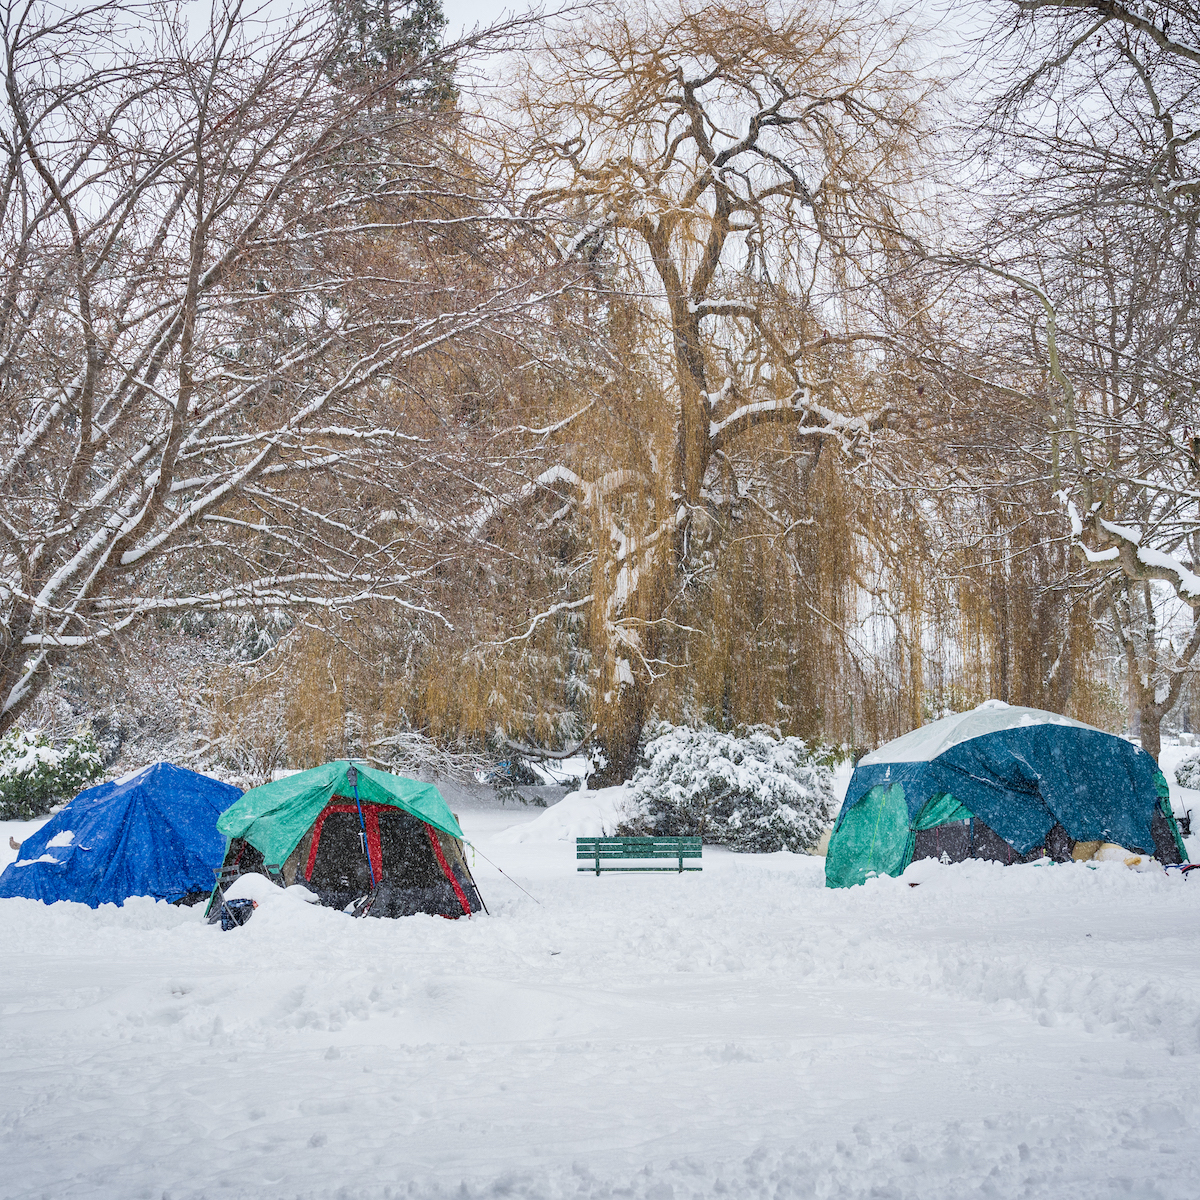 Winter encampments